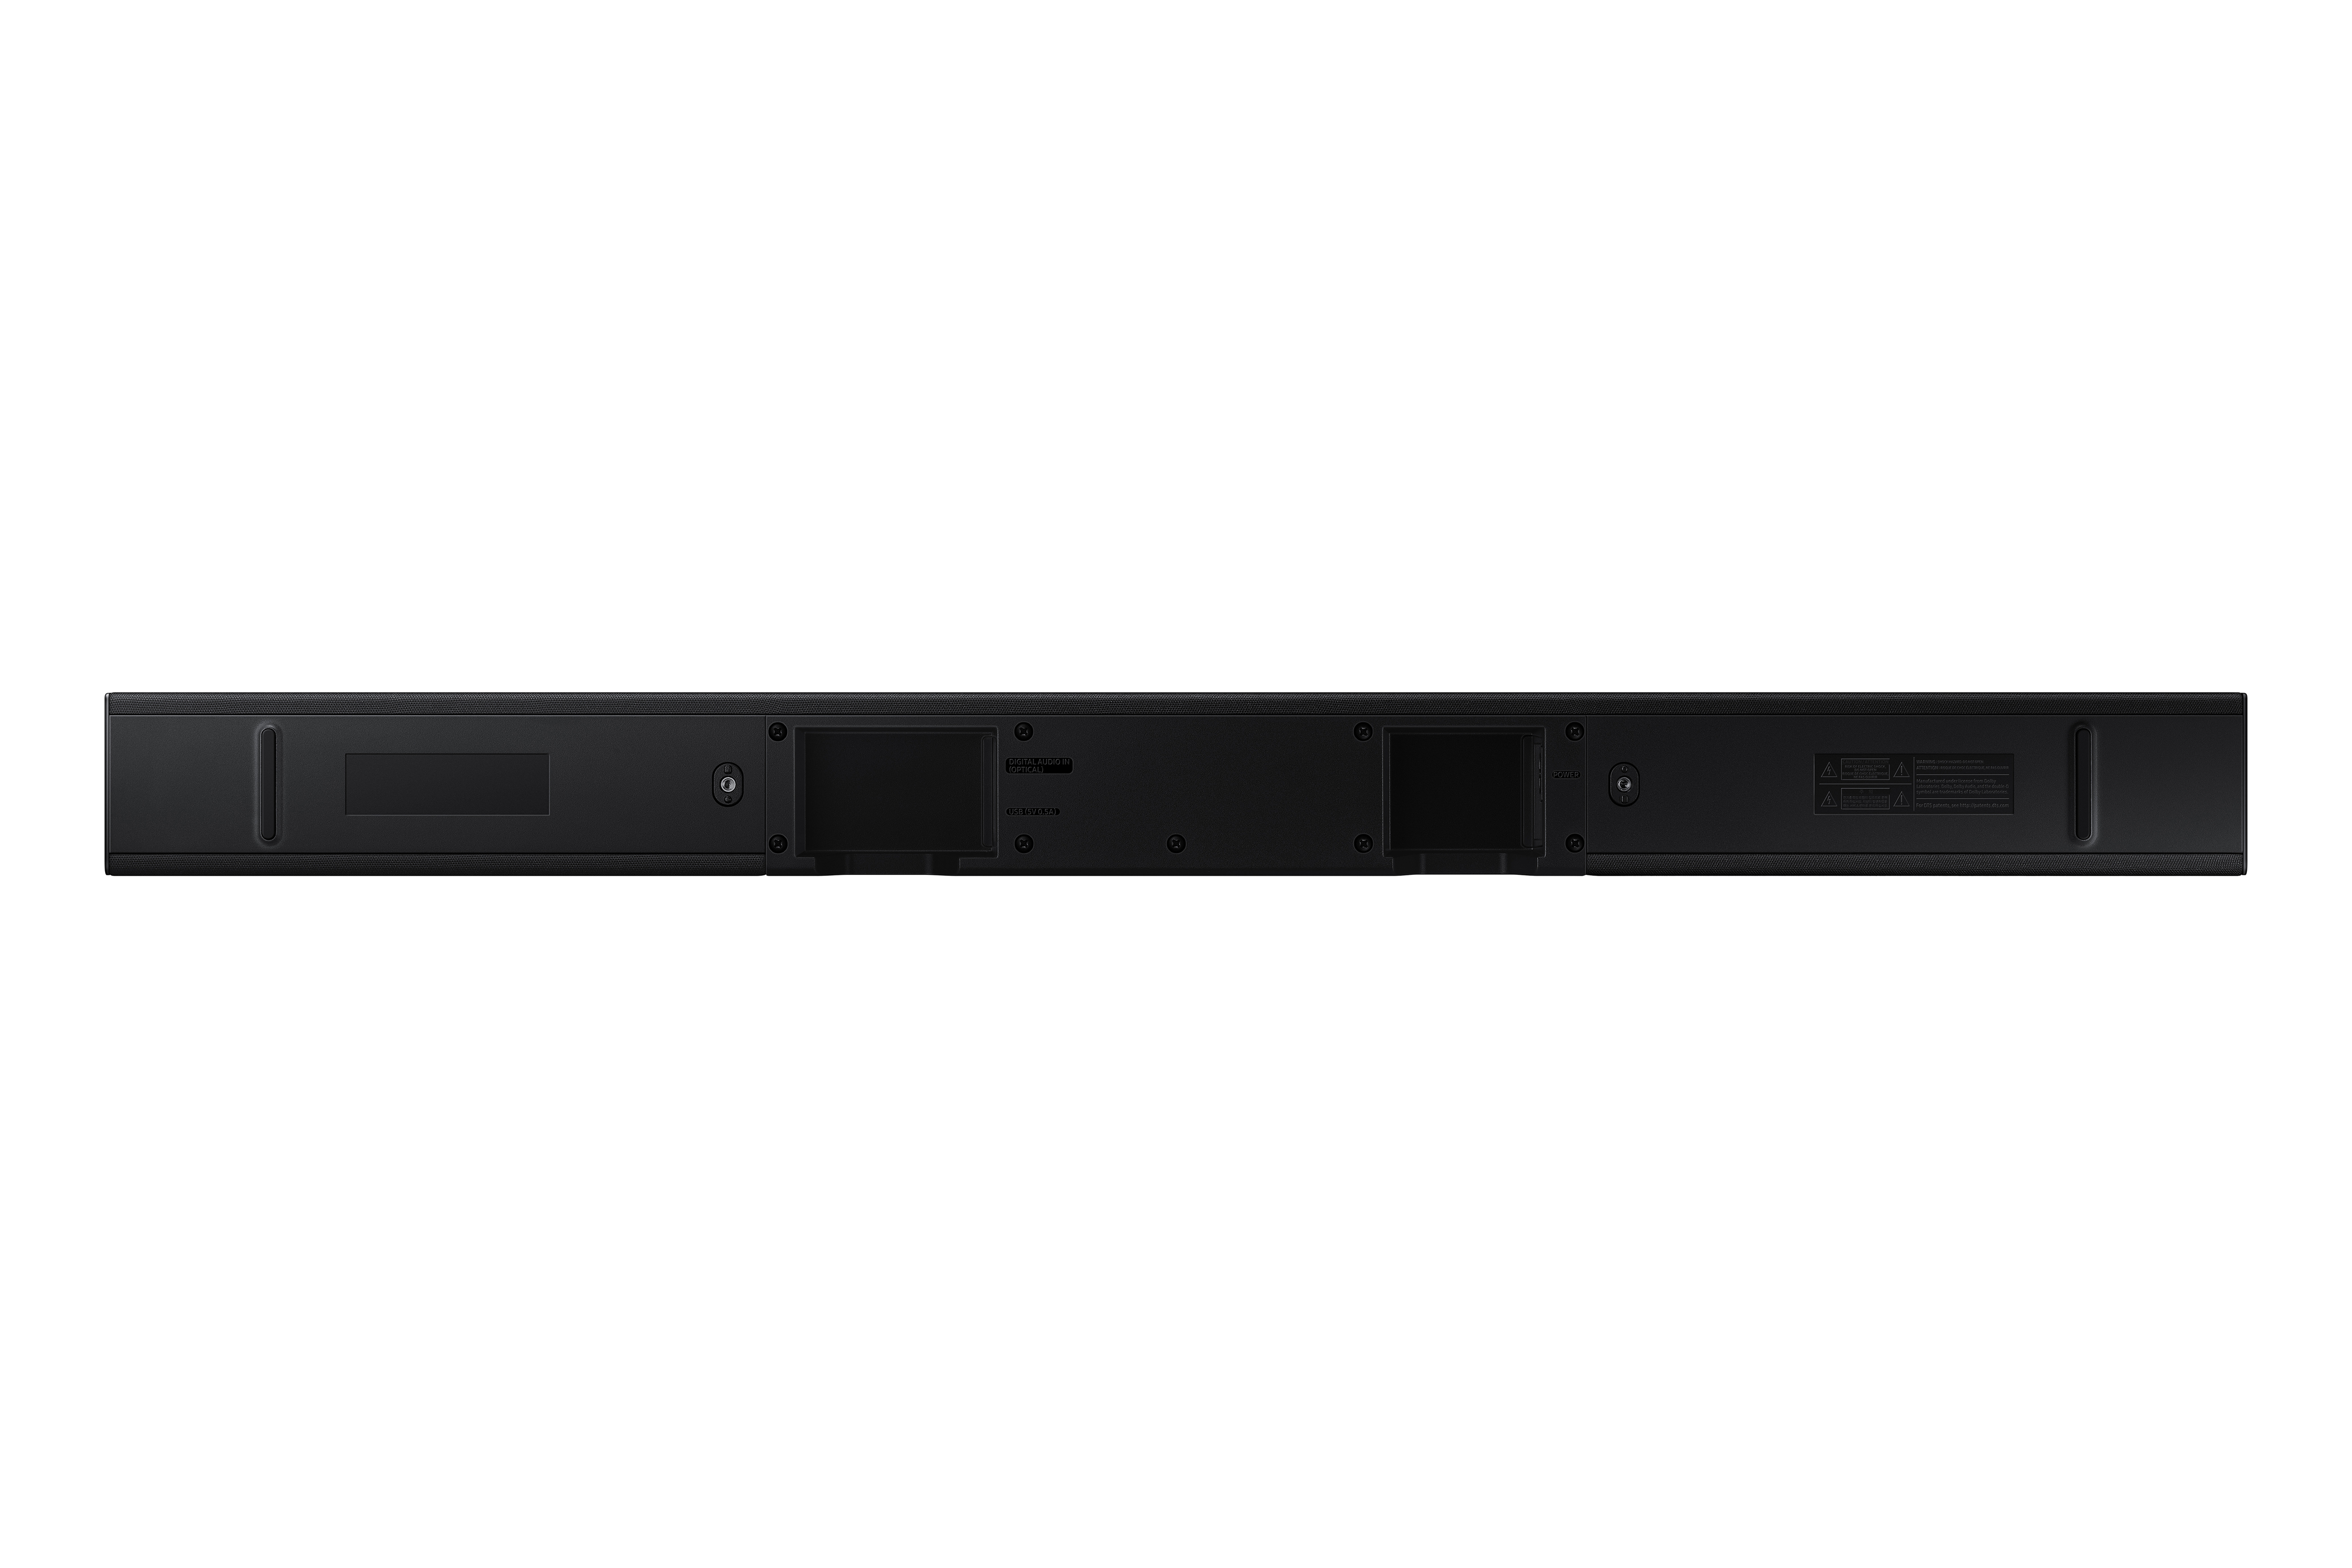 SAMSUNG 170W 2.1ch Soundbar with Wireless Subwoofer - HW-T410 (2020) - image 12 of 17